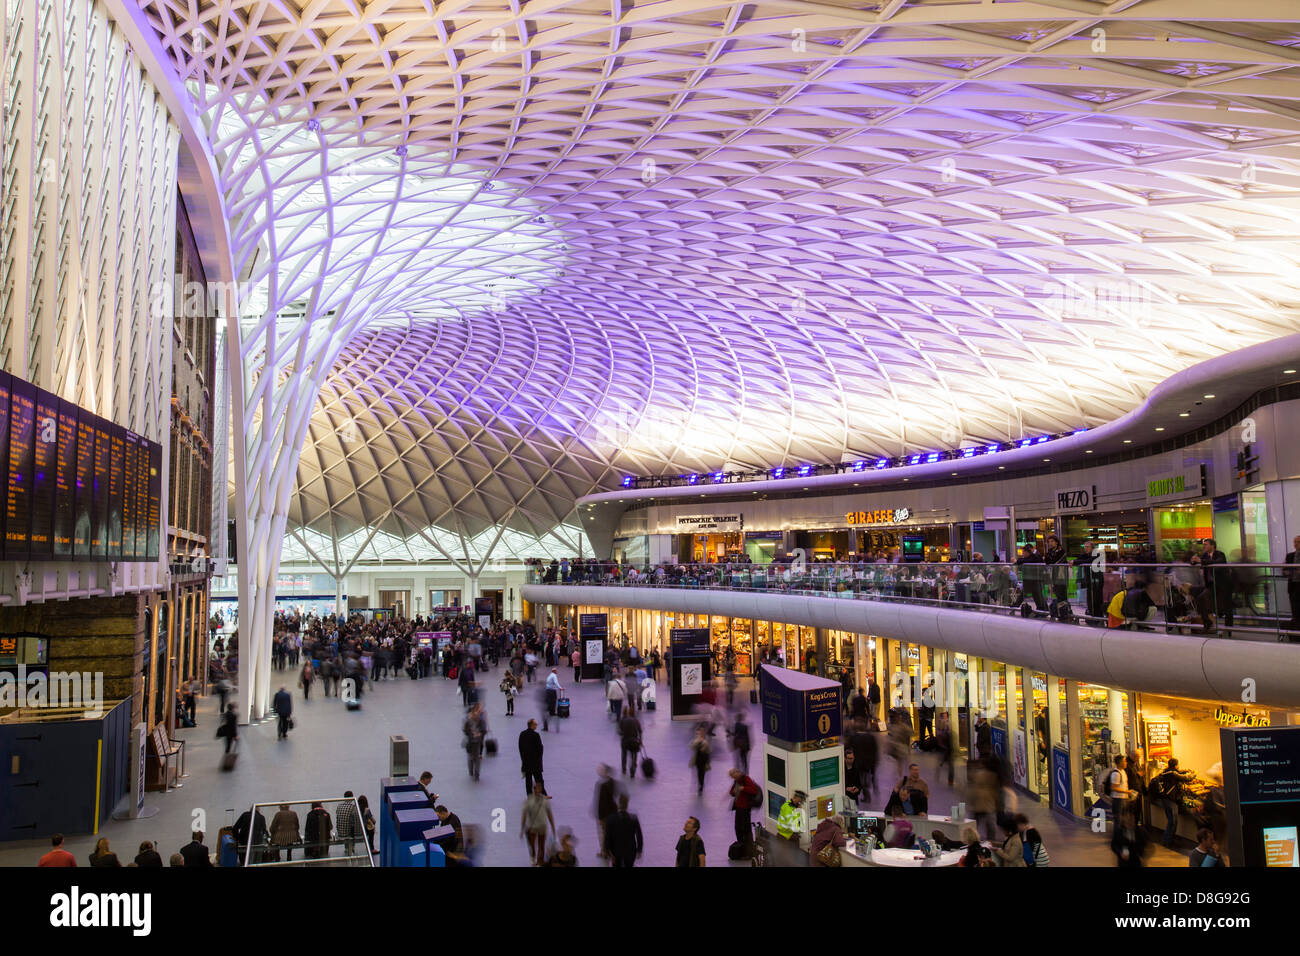 The newly refurbished Kings Cross Station, London, UK. Stock Photo